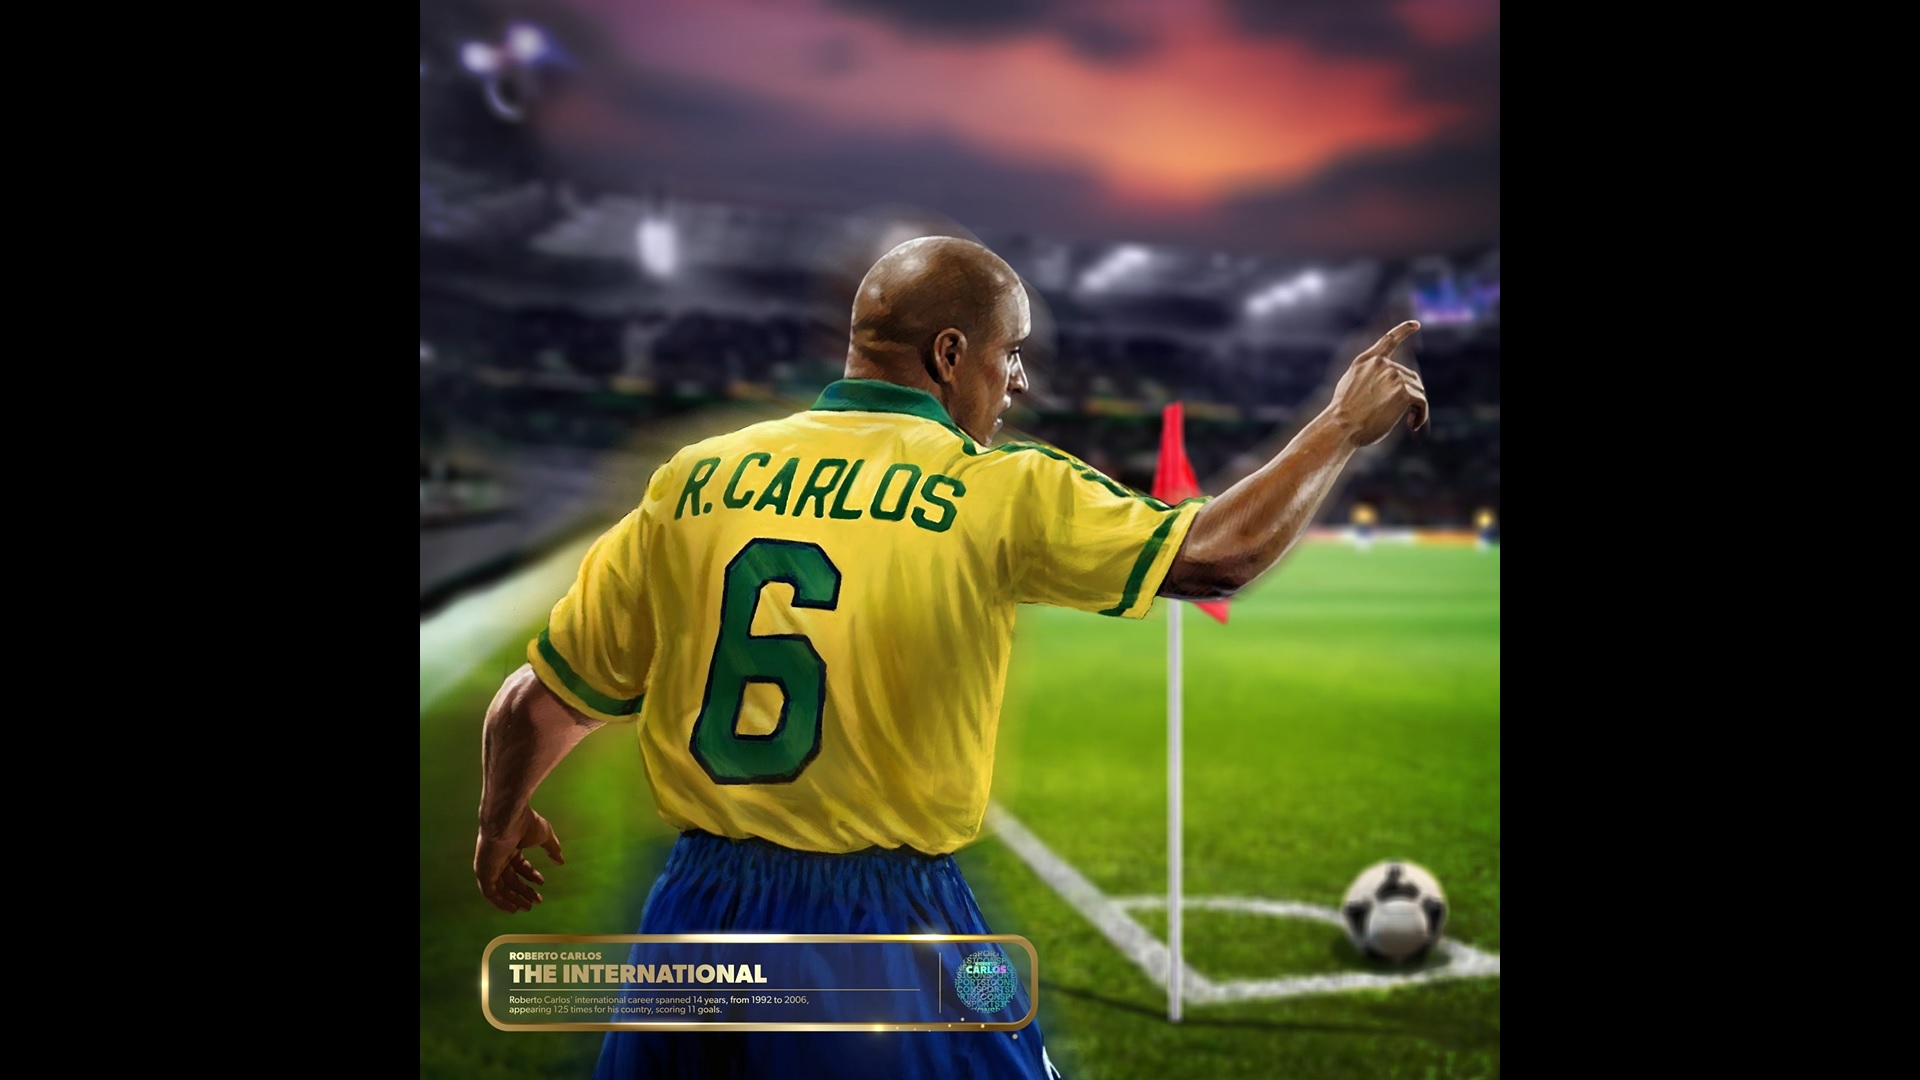 The International - Roberto Carlos x SportsIcon | OpenSea